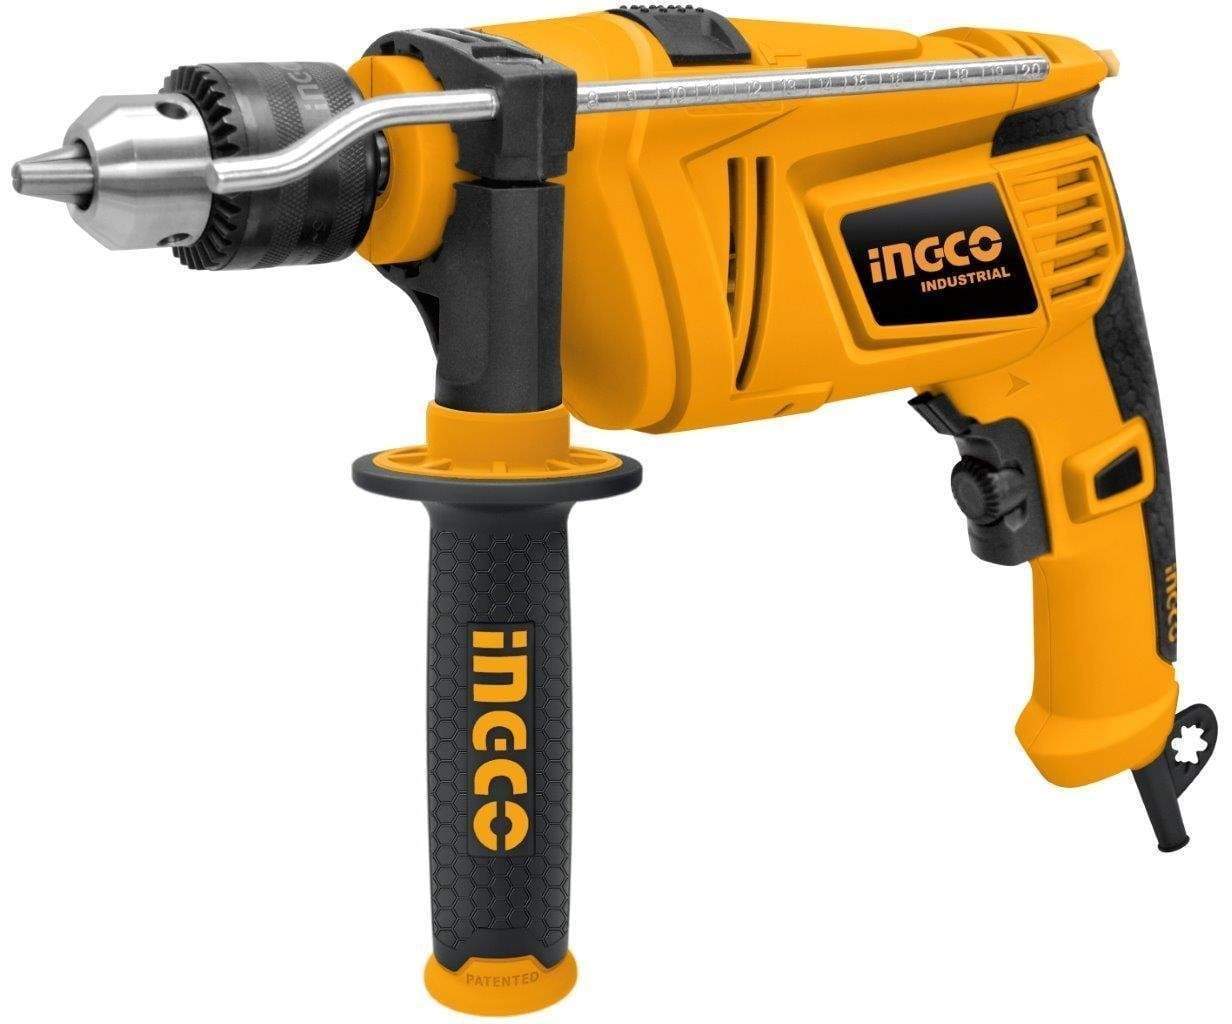 Ingco Hammer Impact Drill 13mm 850W - ID8508 | Supply Master | Accra, Ghana Tools Building Steel Engineering Hardware tool